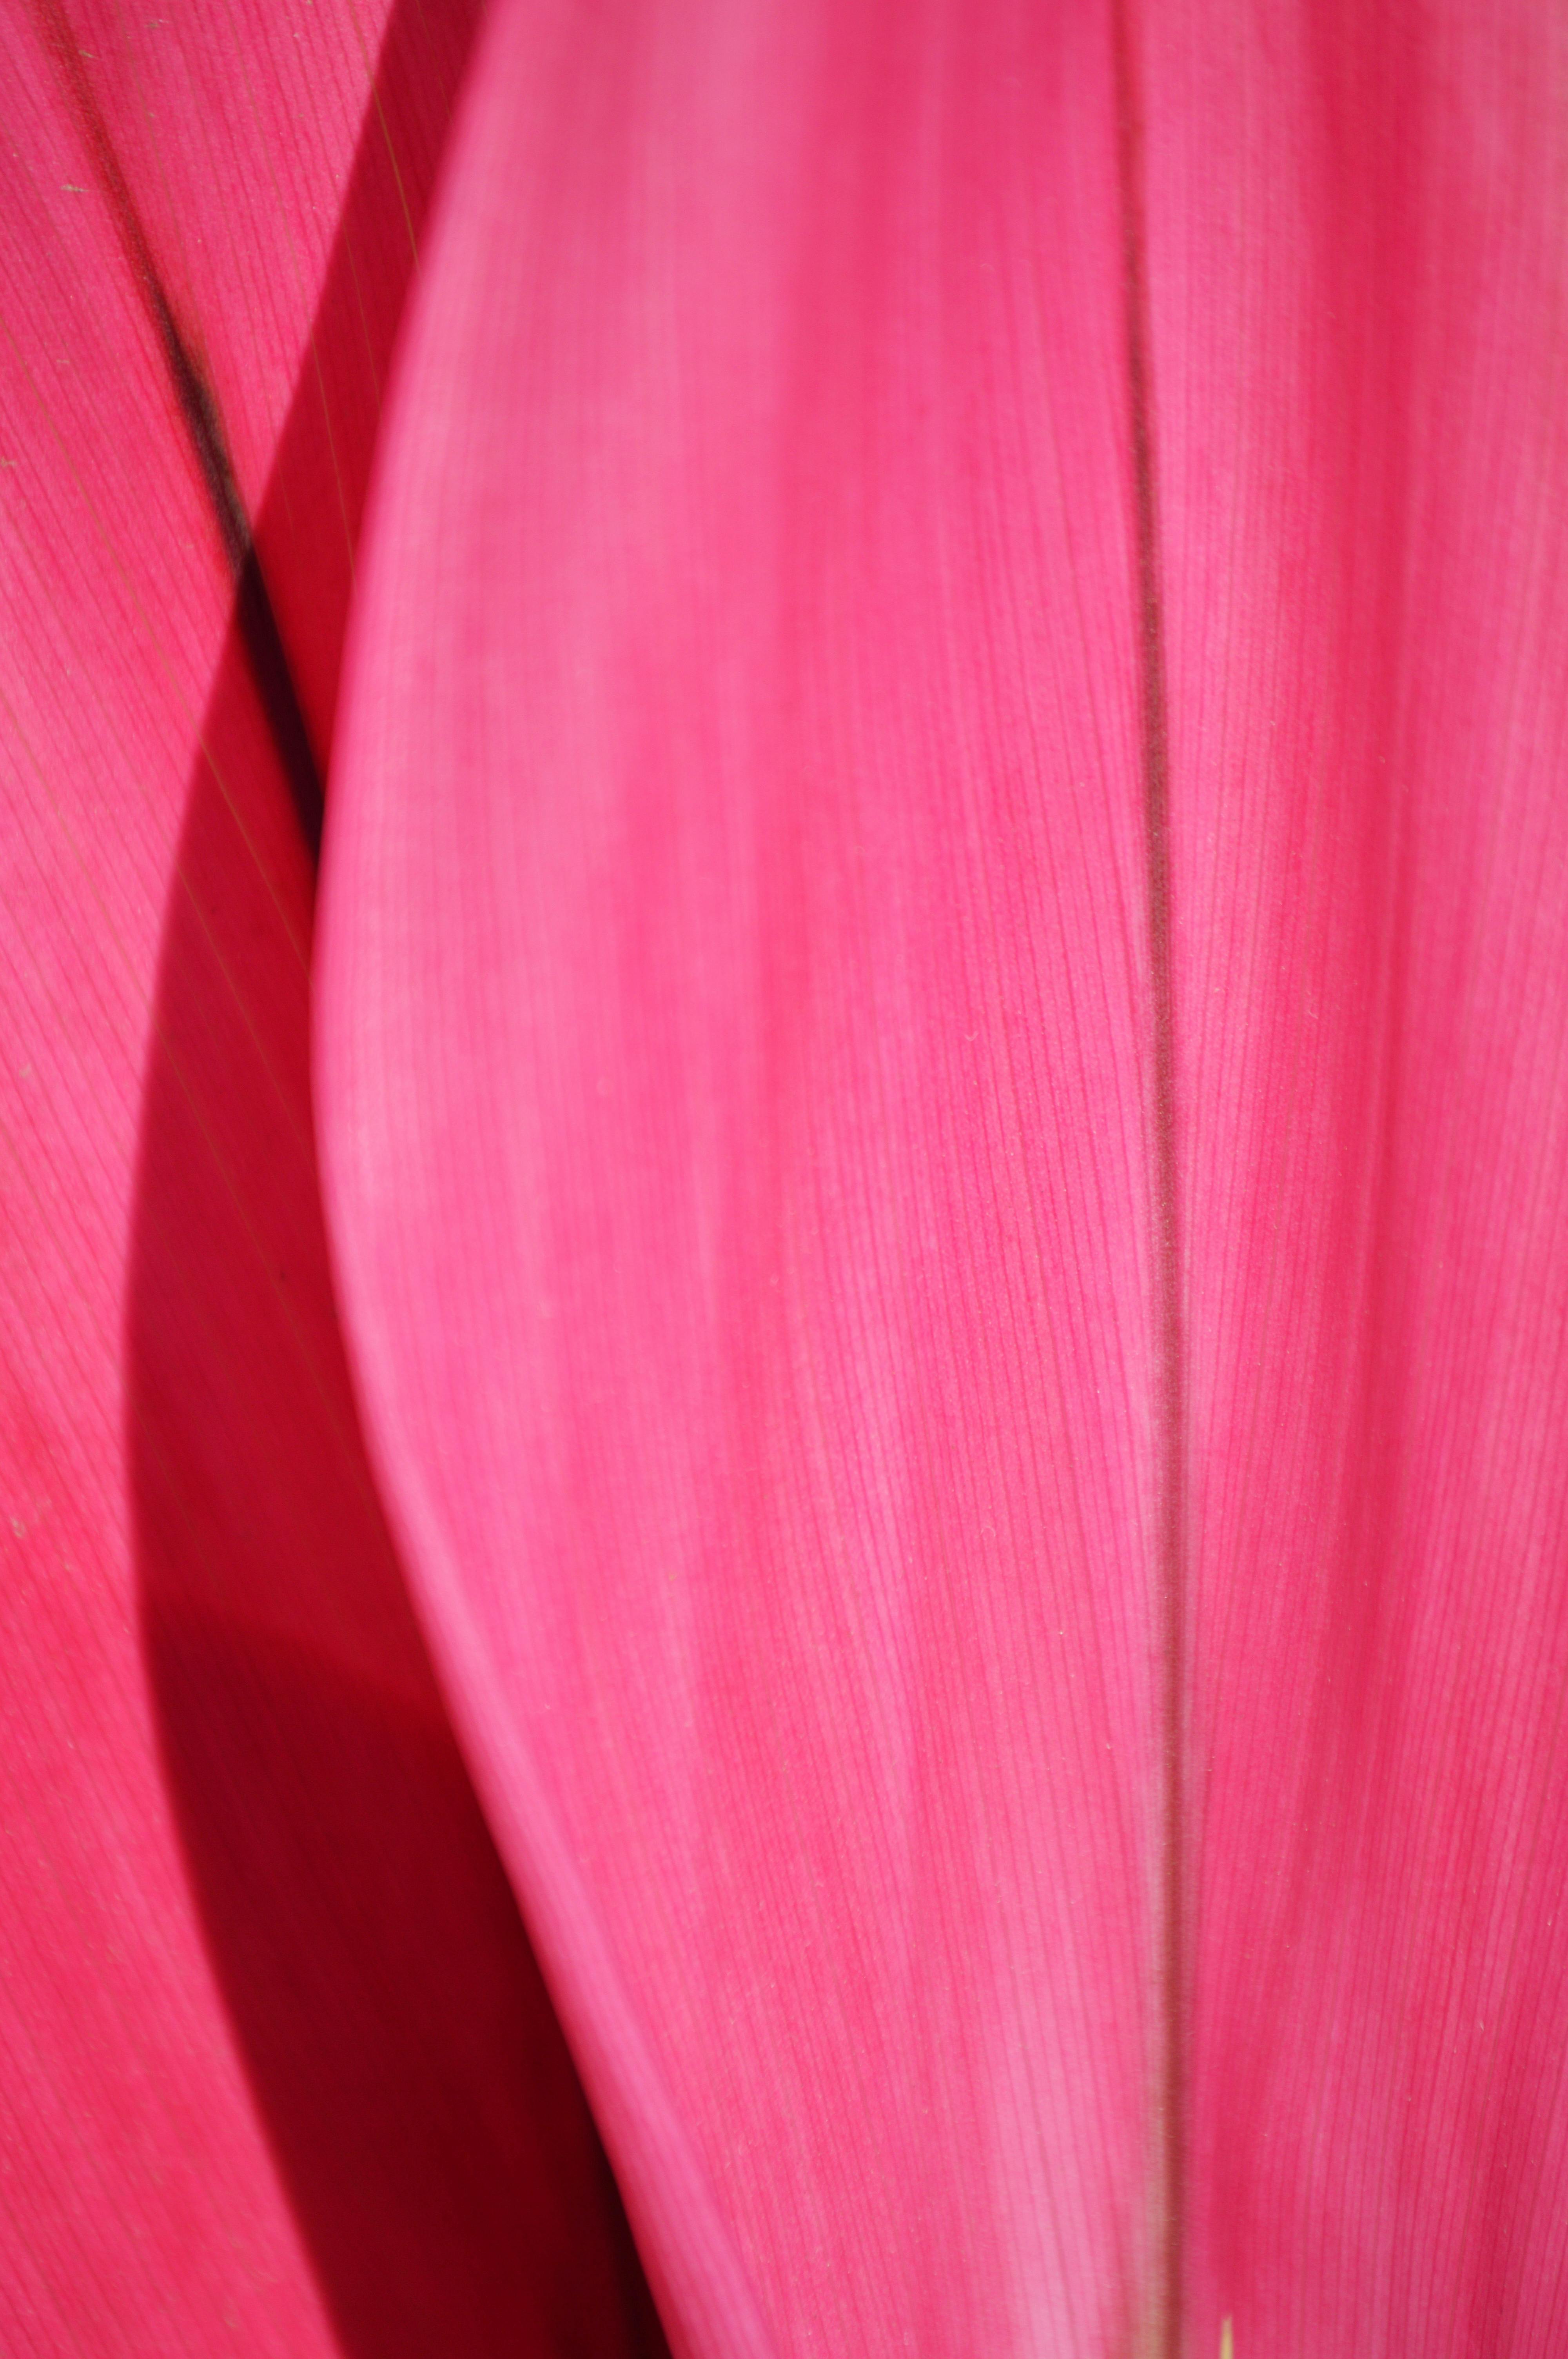 Plastic Pink Textured Background Magenta Wallpaper Stock Illustration  1245400792  Shutterstock